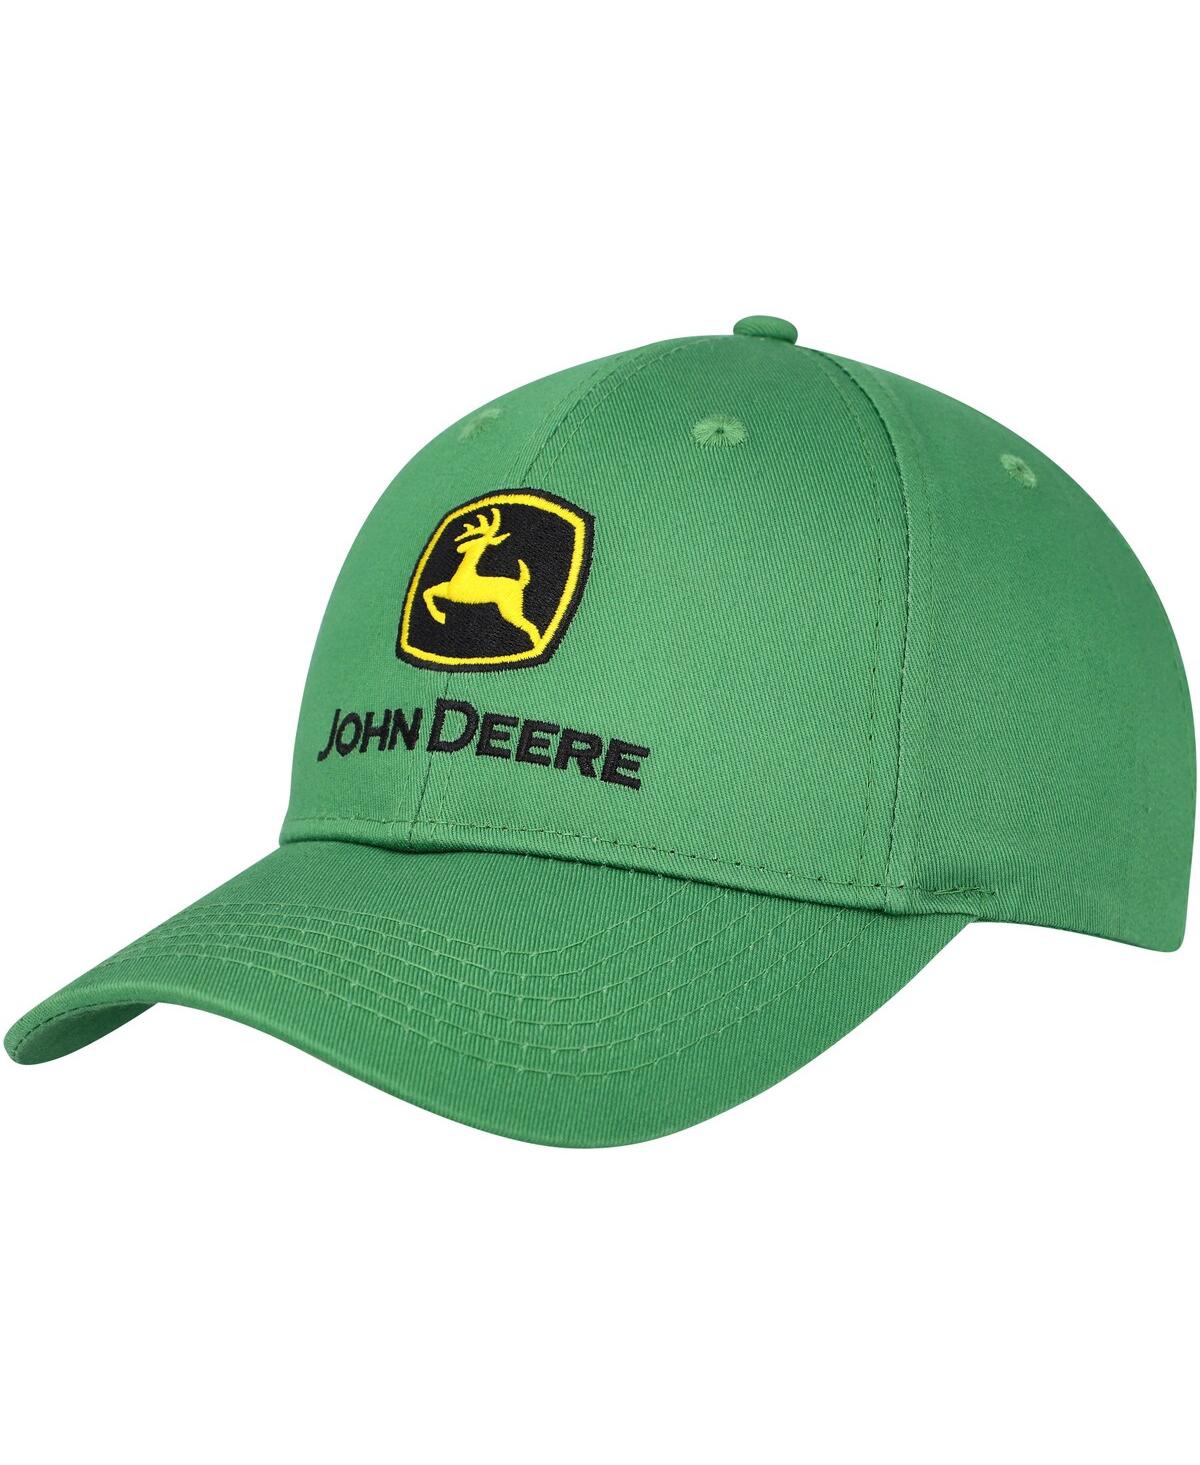 Top Of The World Men's  Green John Deere Classic Vintage-like Twill Adjustable Hat